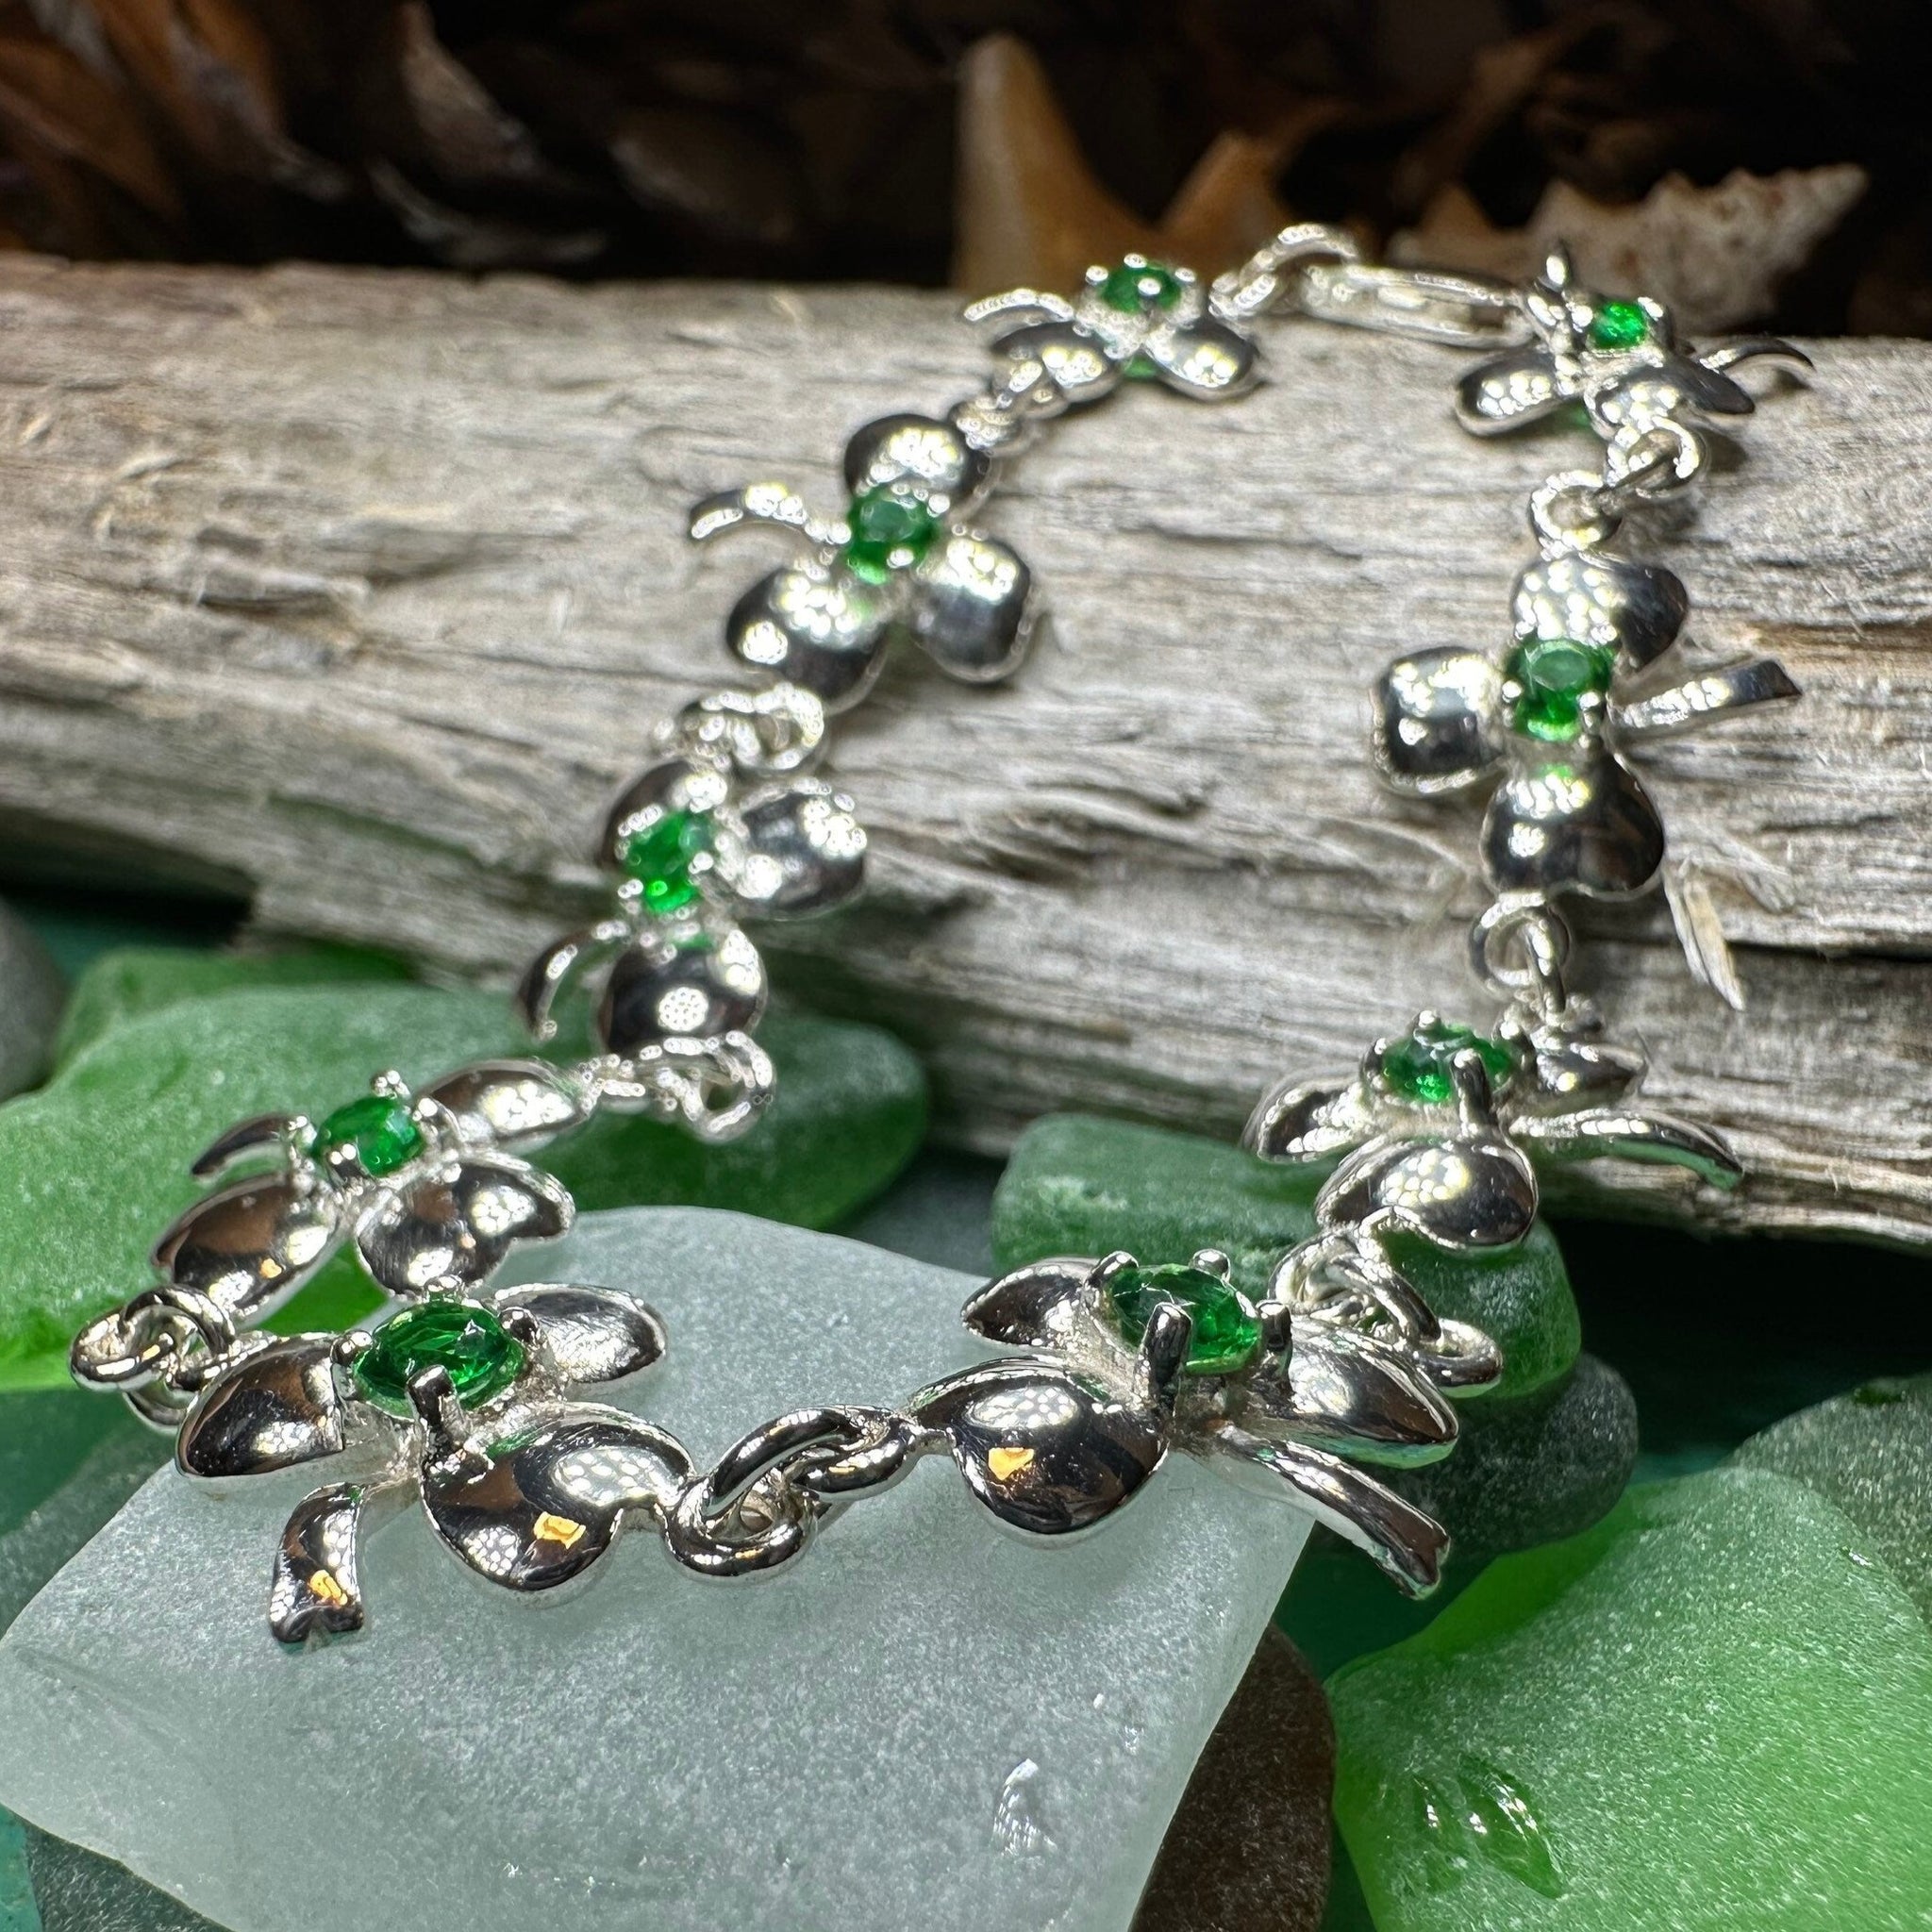 Green Leaf Bracelet Adjustable Cuff Bangle Women Party Jewelry Gift | eBay